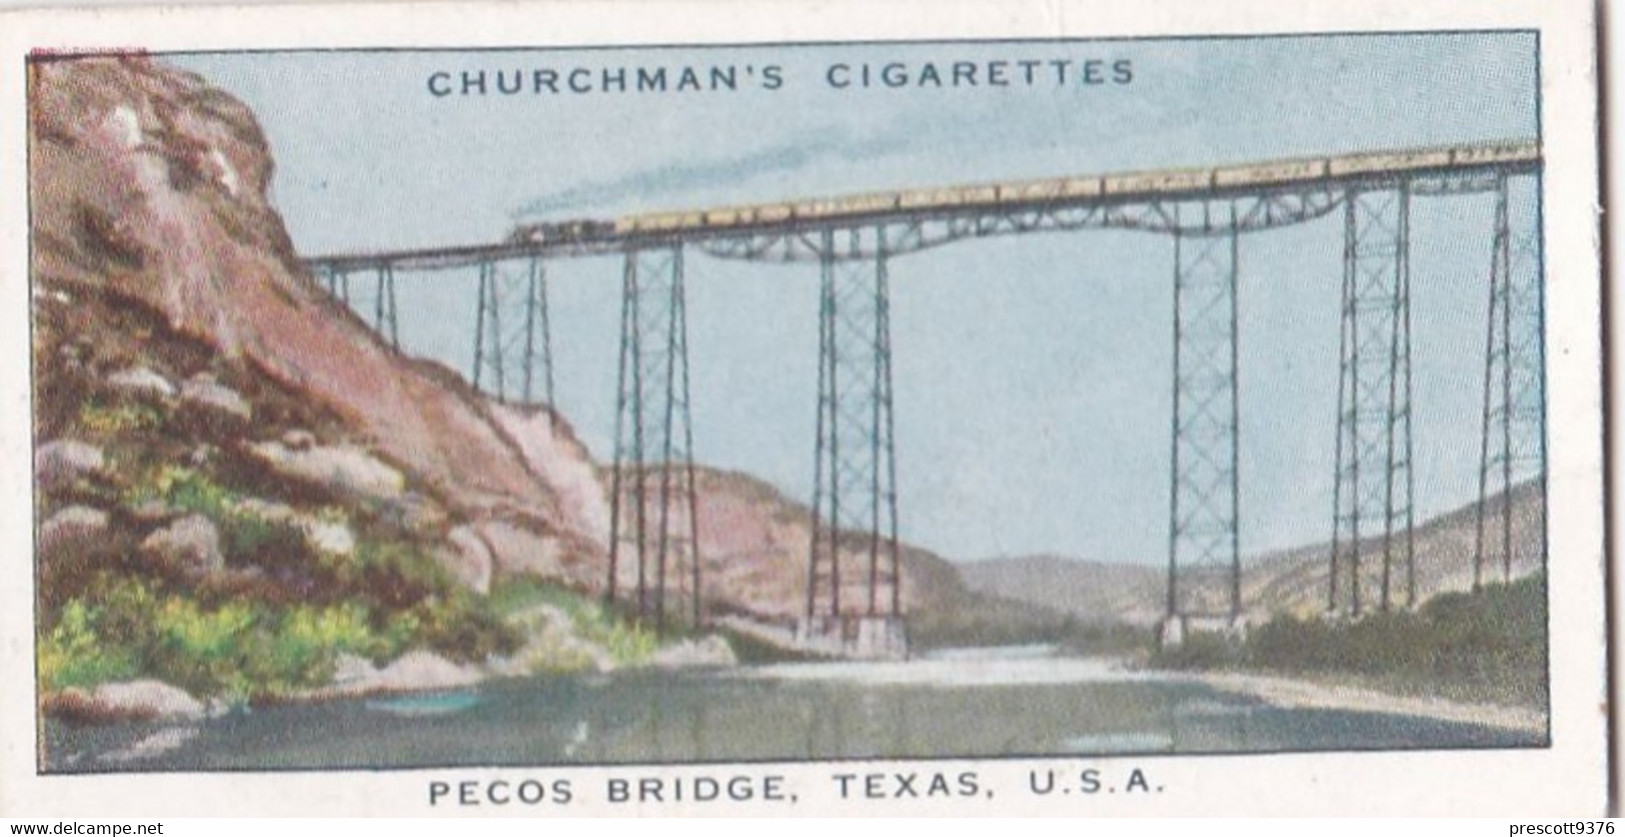 Wonderful Railway Travel, 1937 - 47 Pecos Bridge, Texas - Churchman Cigarette Card - Trains - Churchman